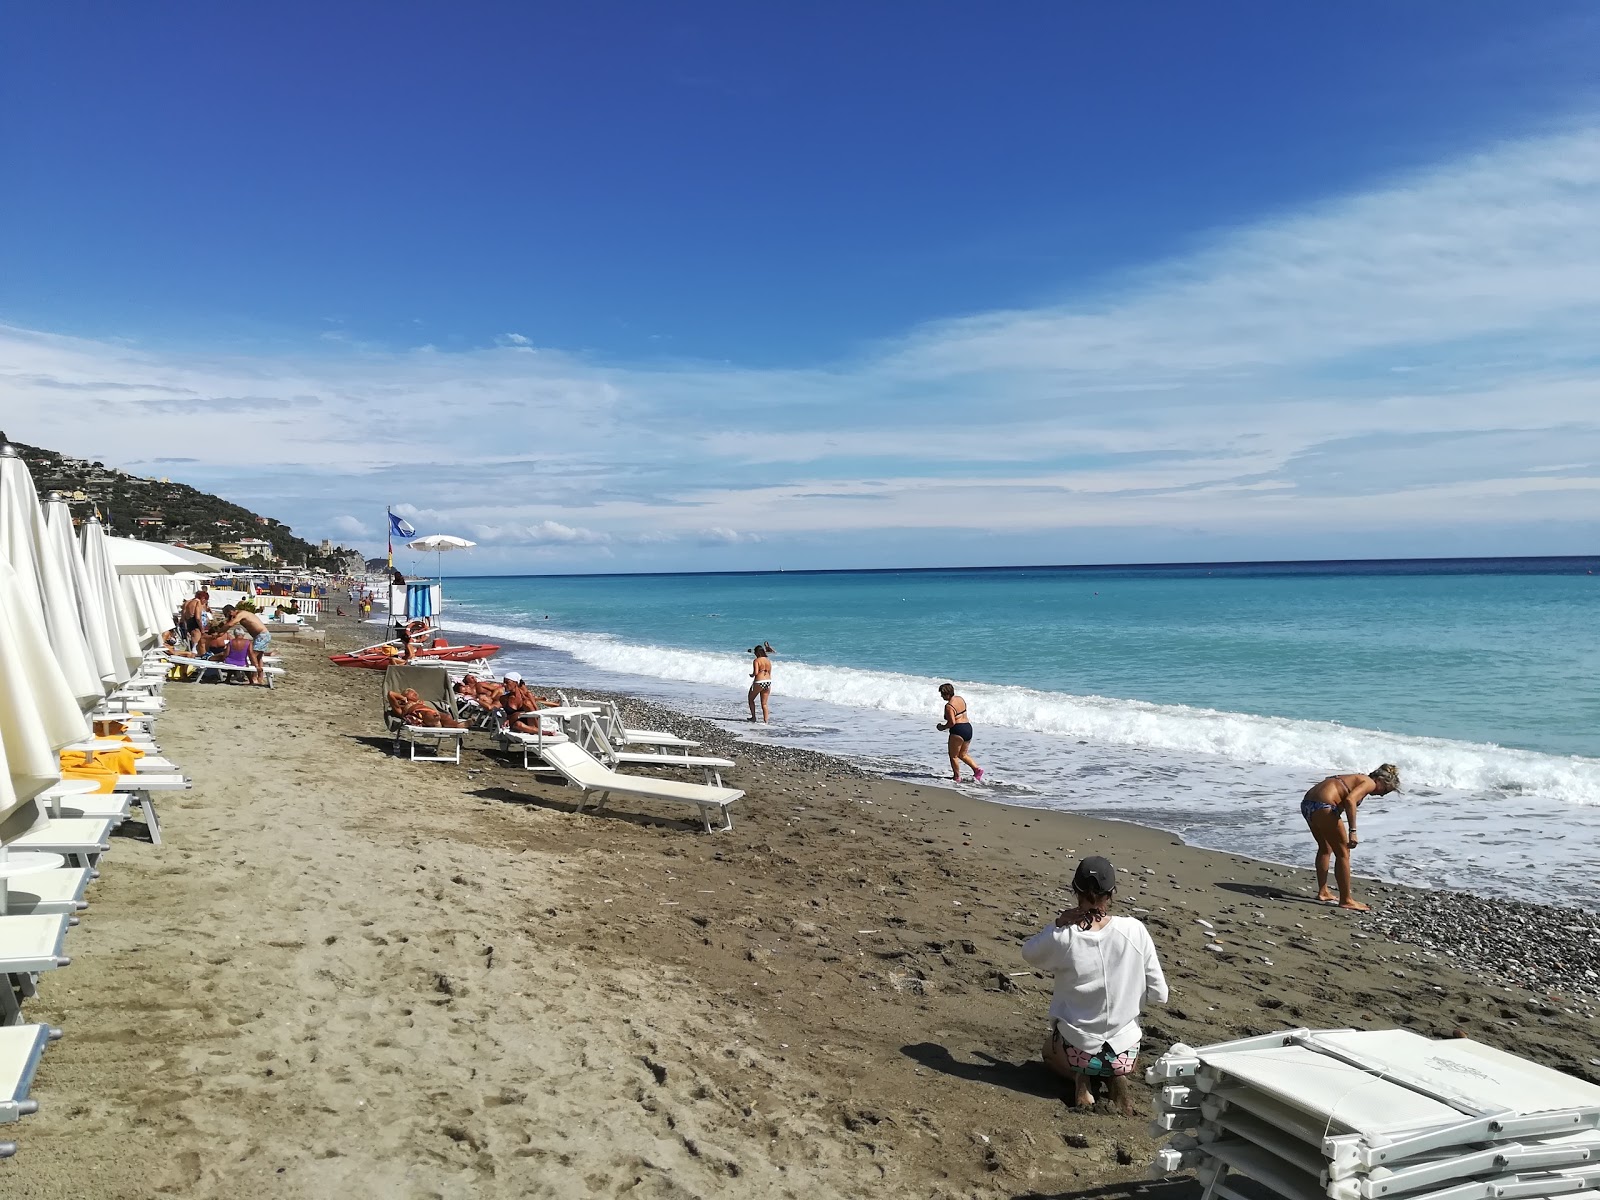 Fotografija Spiaggia libera Attrezzata podprto z obalami